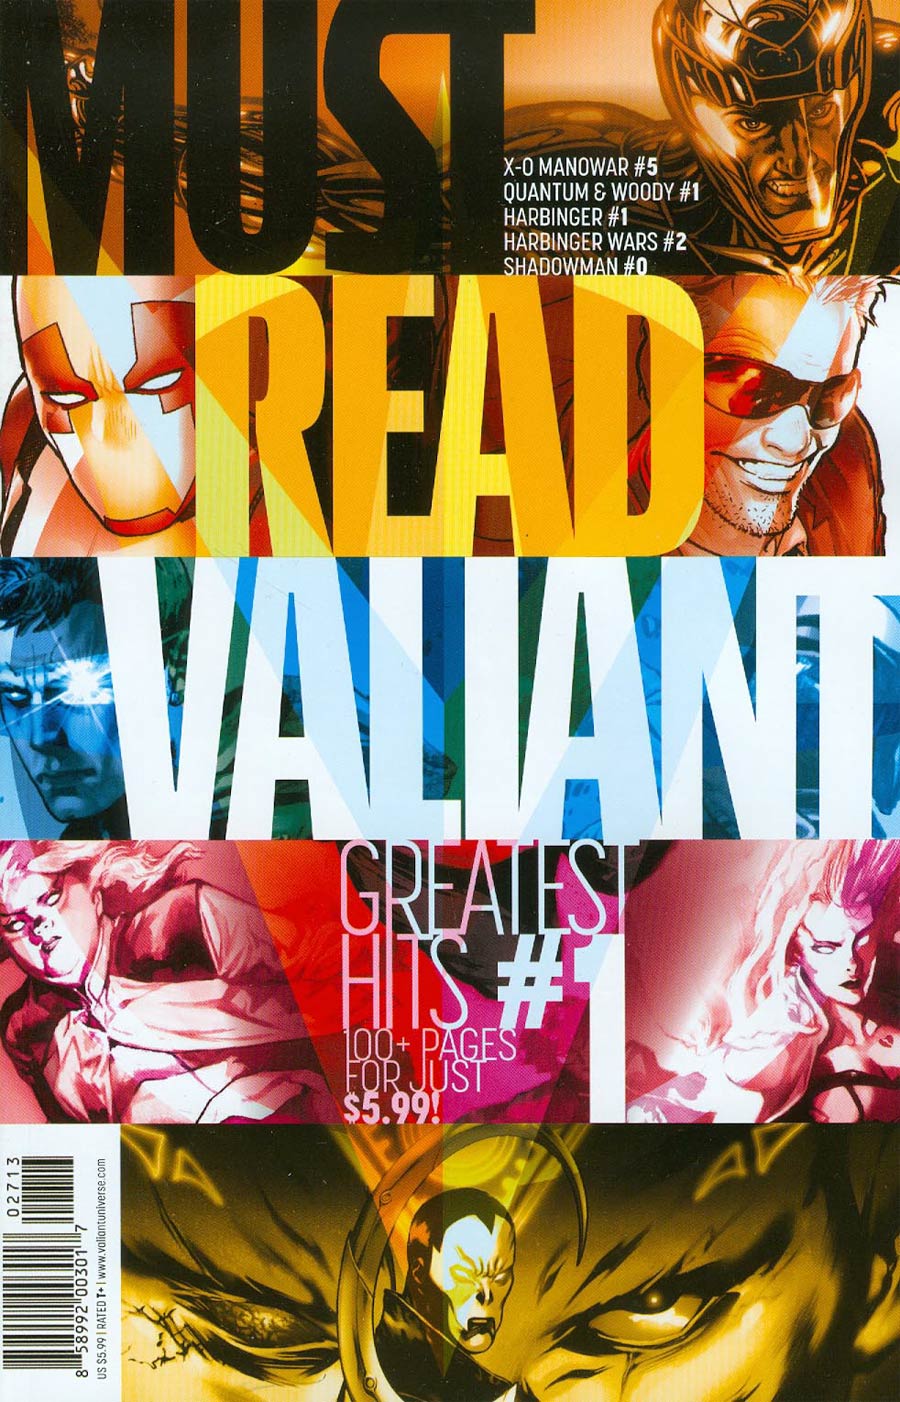 Must Read Valiant Greatest Hits #1